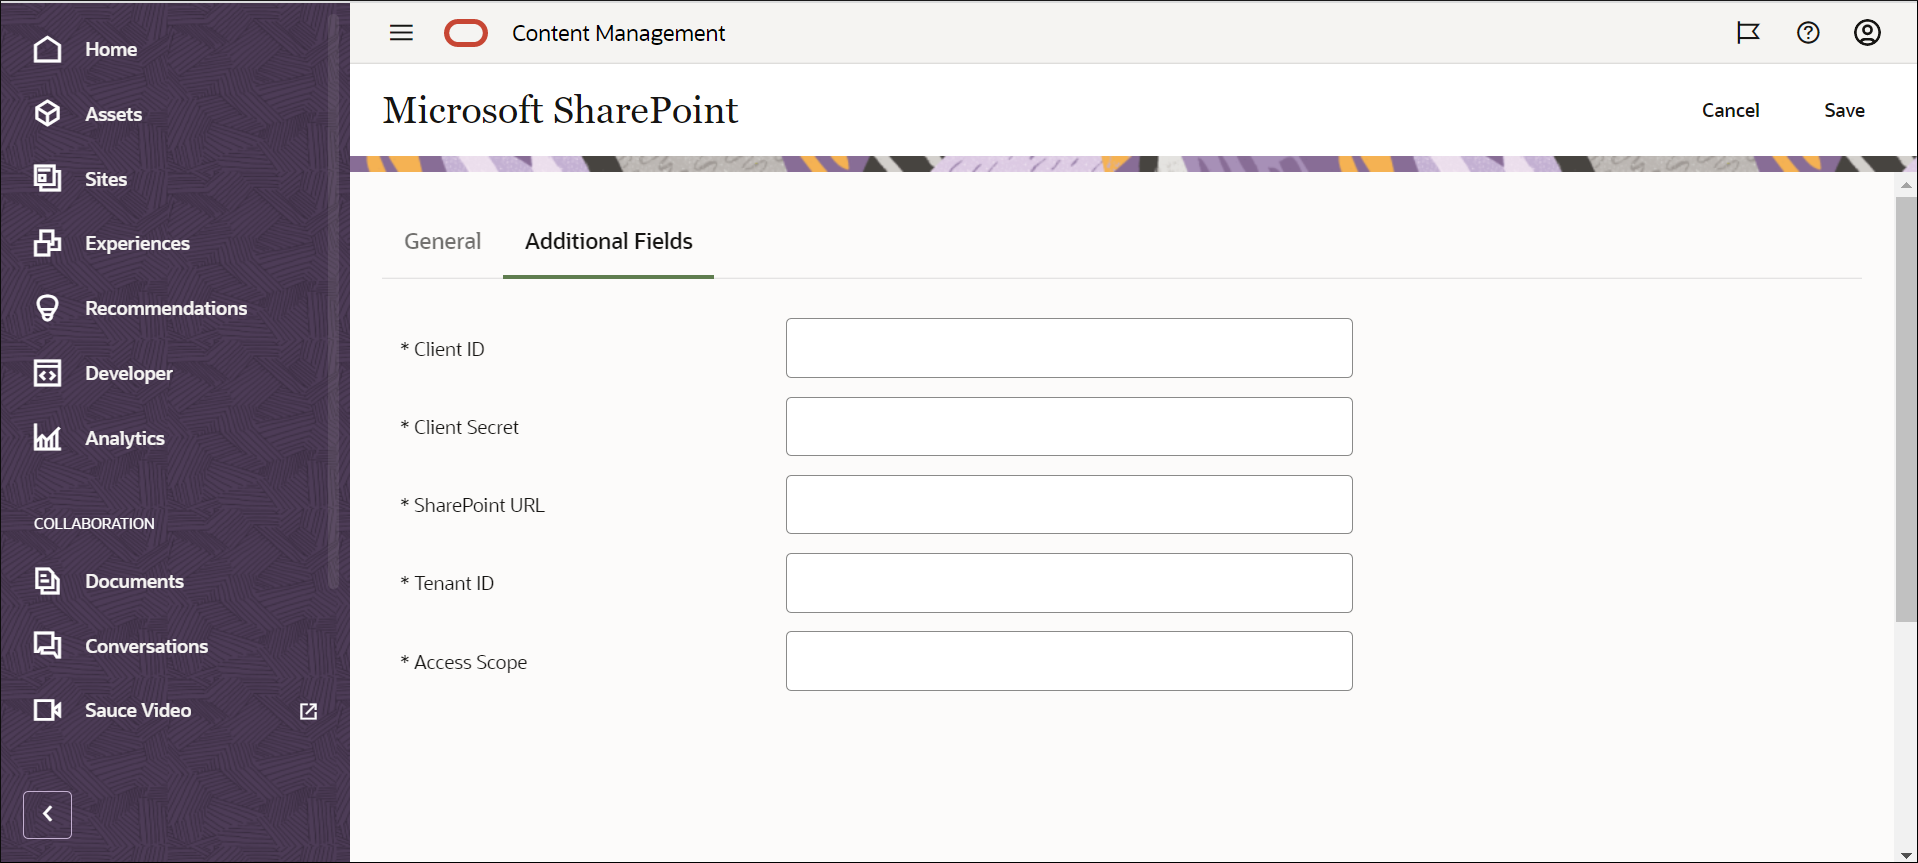 Description of sharepoint-connector-custom-fields.png follows